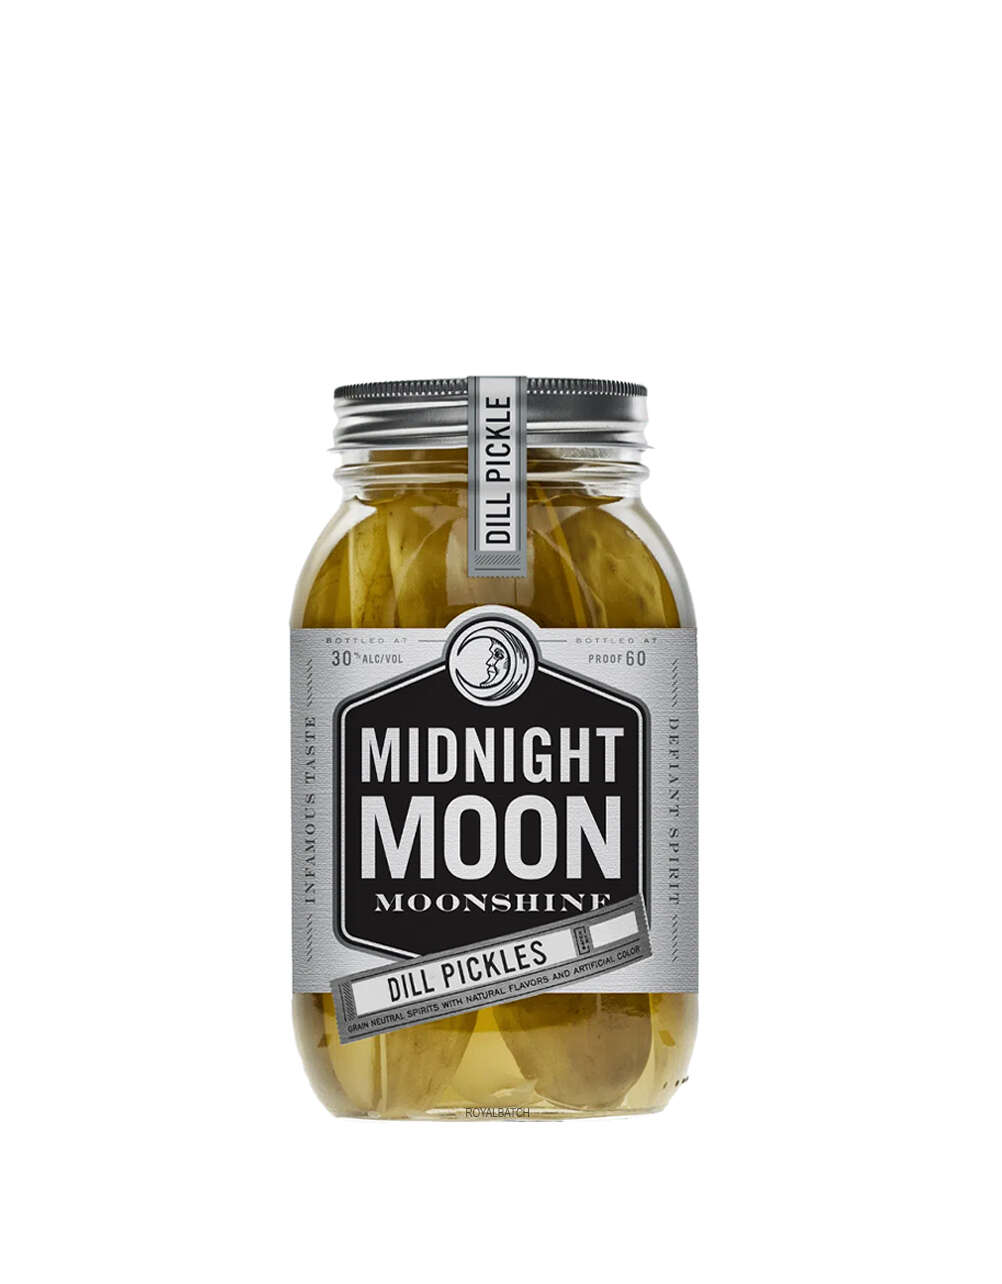 Midnight Moon Dill Pickles Moonshine